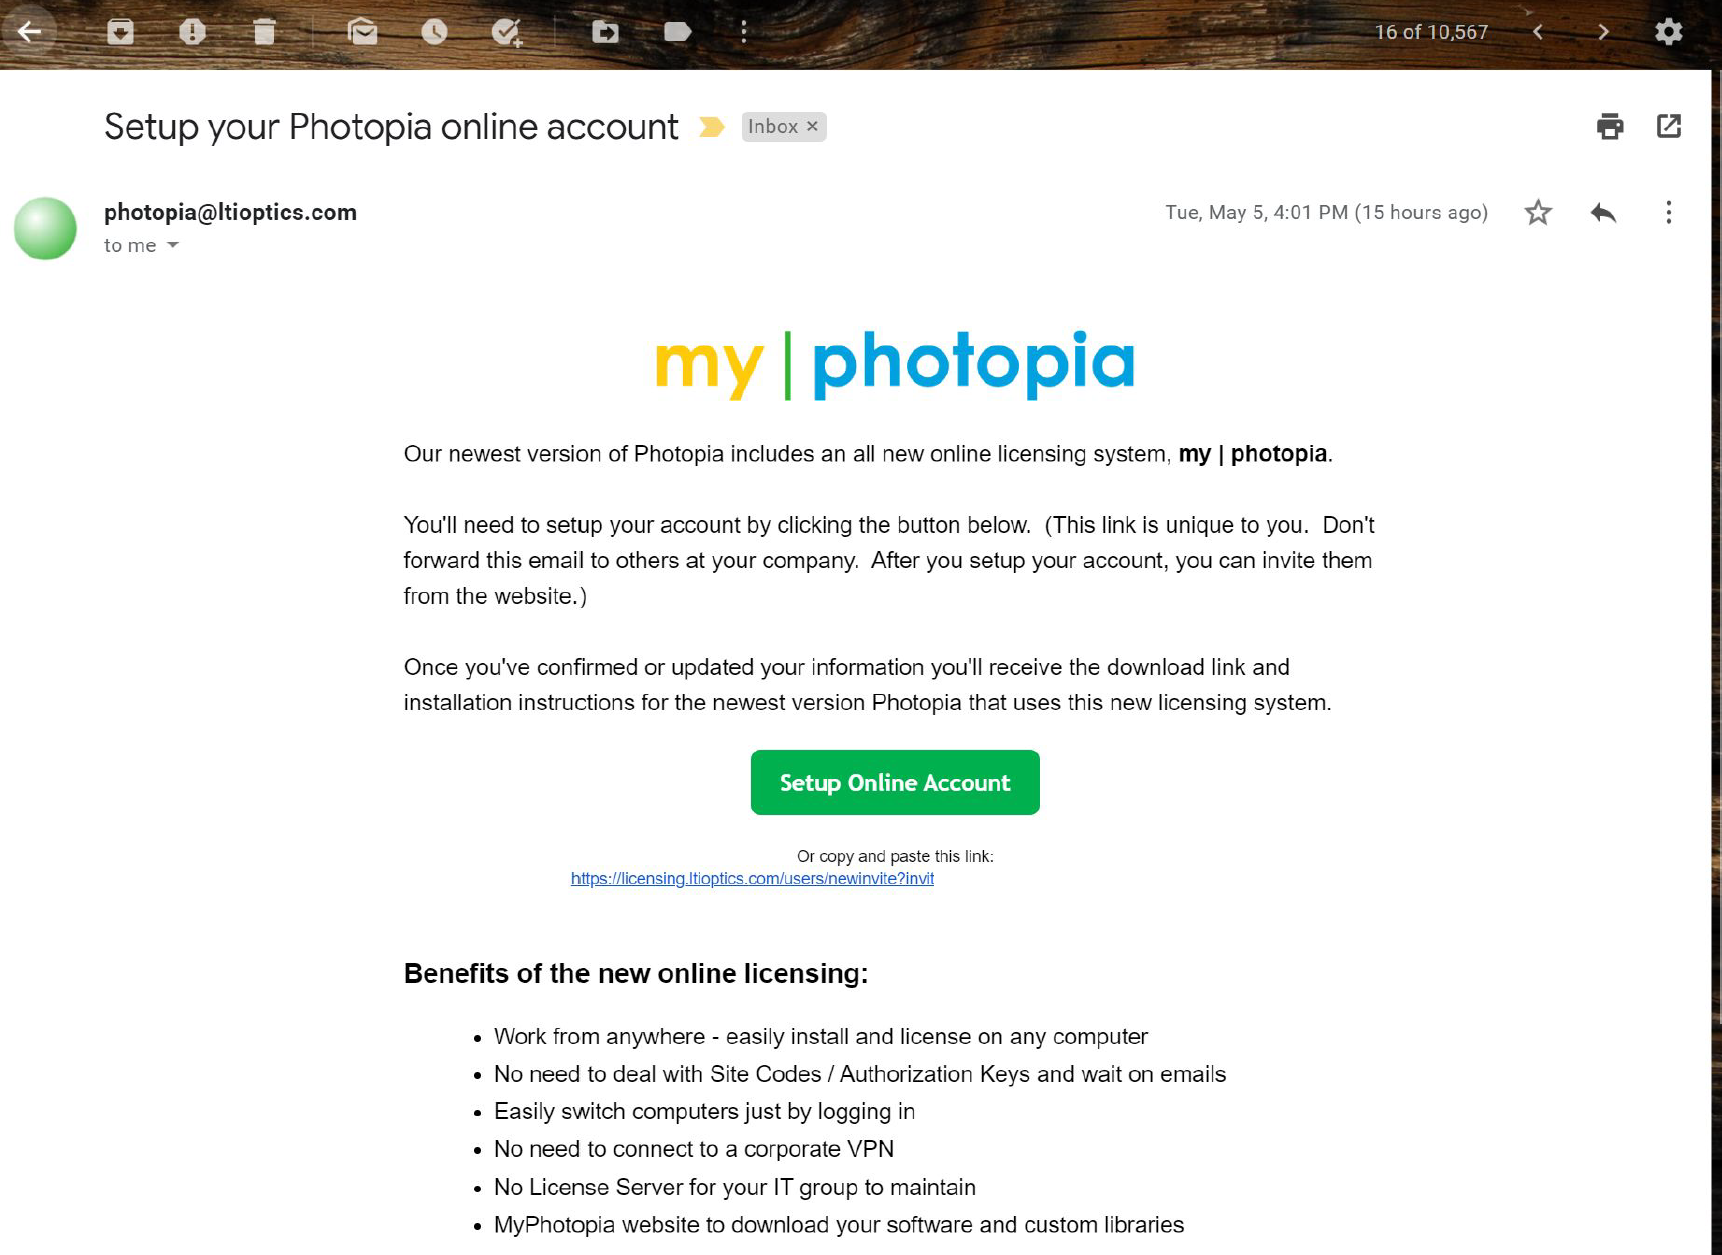 my photopia - email invite